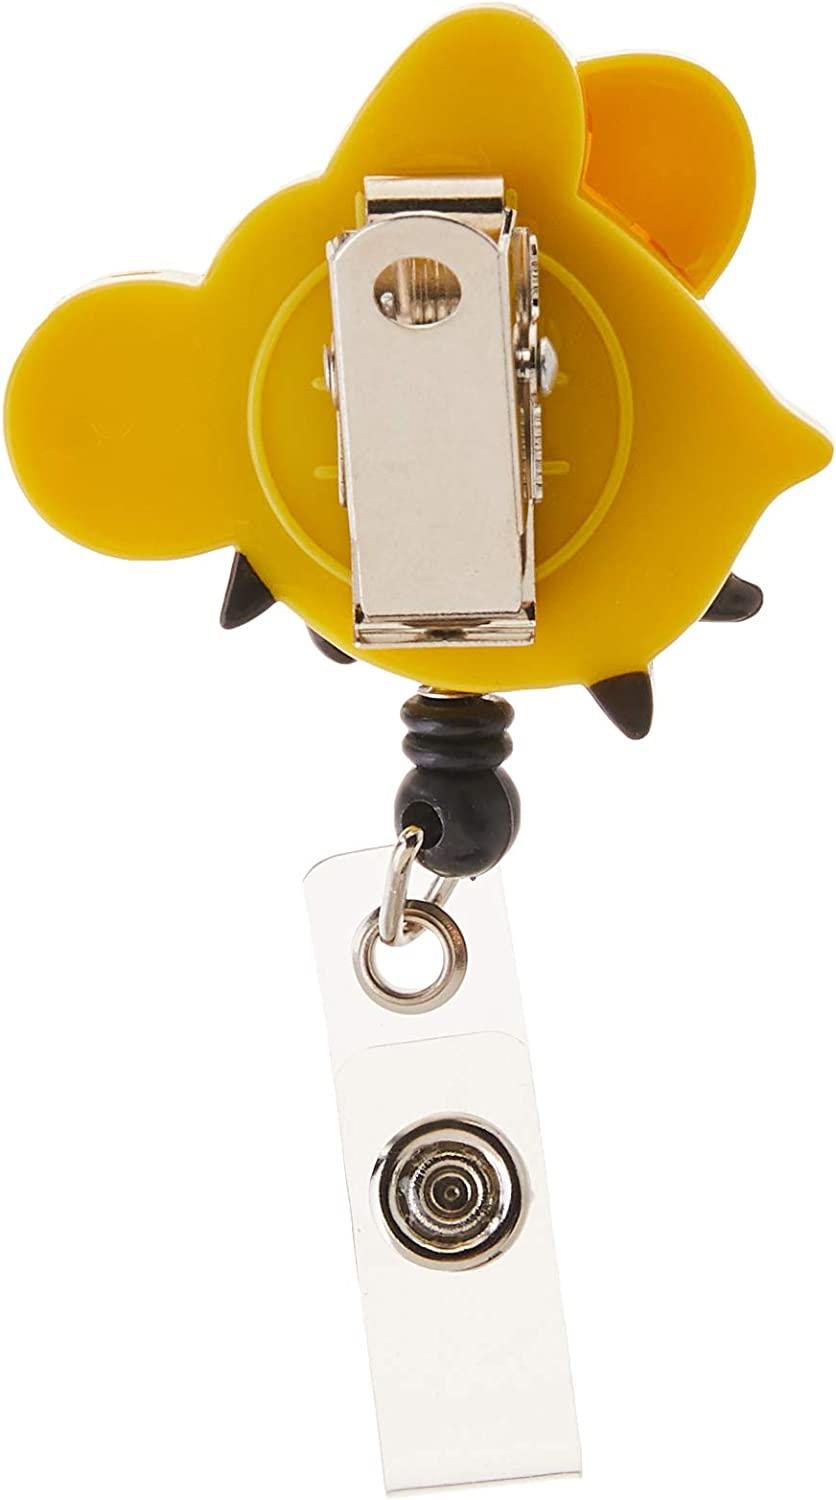 Prestige Medical S14-bee Retractable Badge Holder with Bulldog